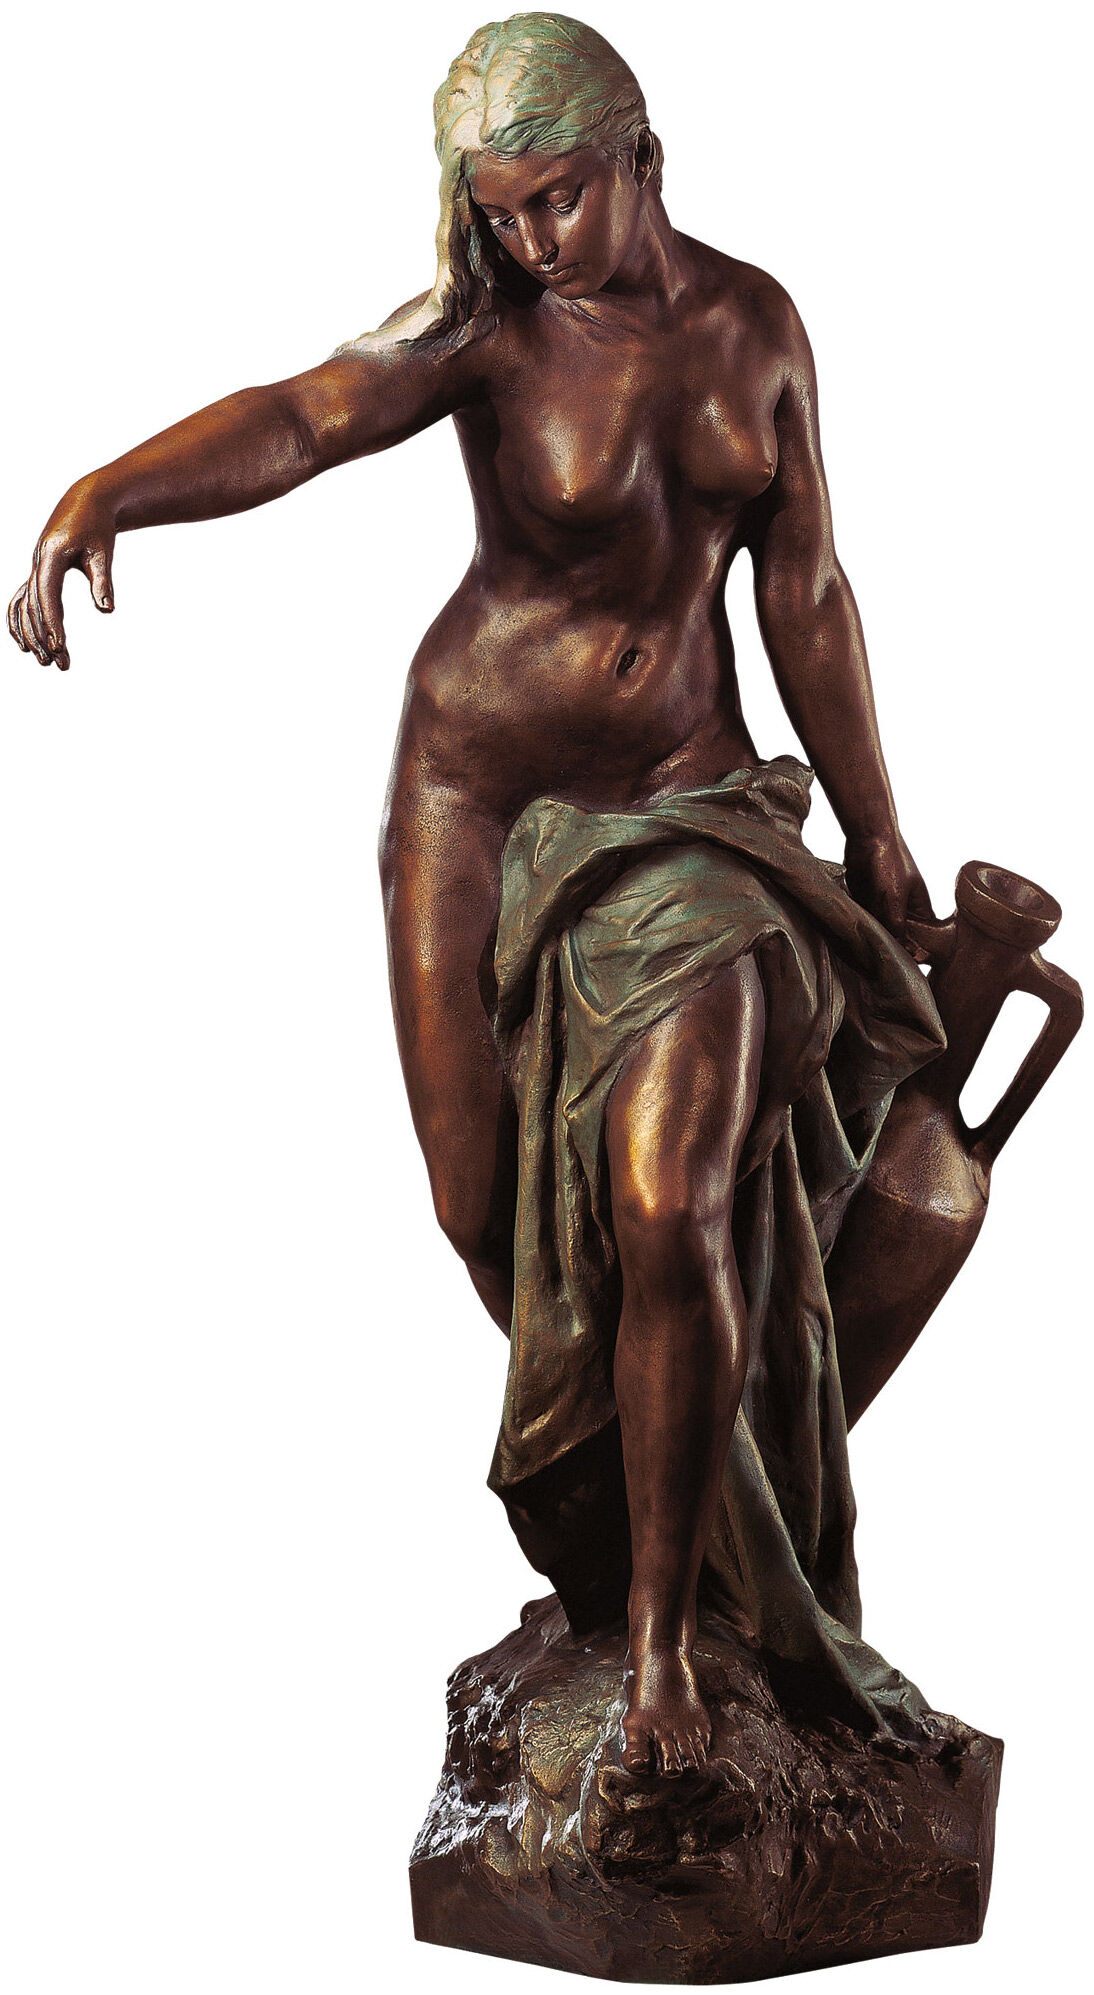 Sculpture "Water Carrier Rebekka" (1897), bonded bronze version by Gustav Eberlein